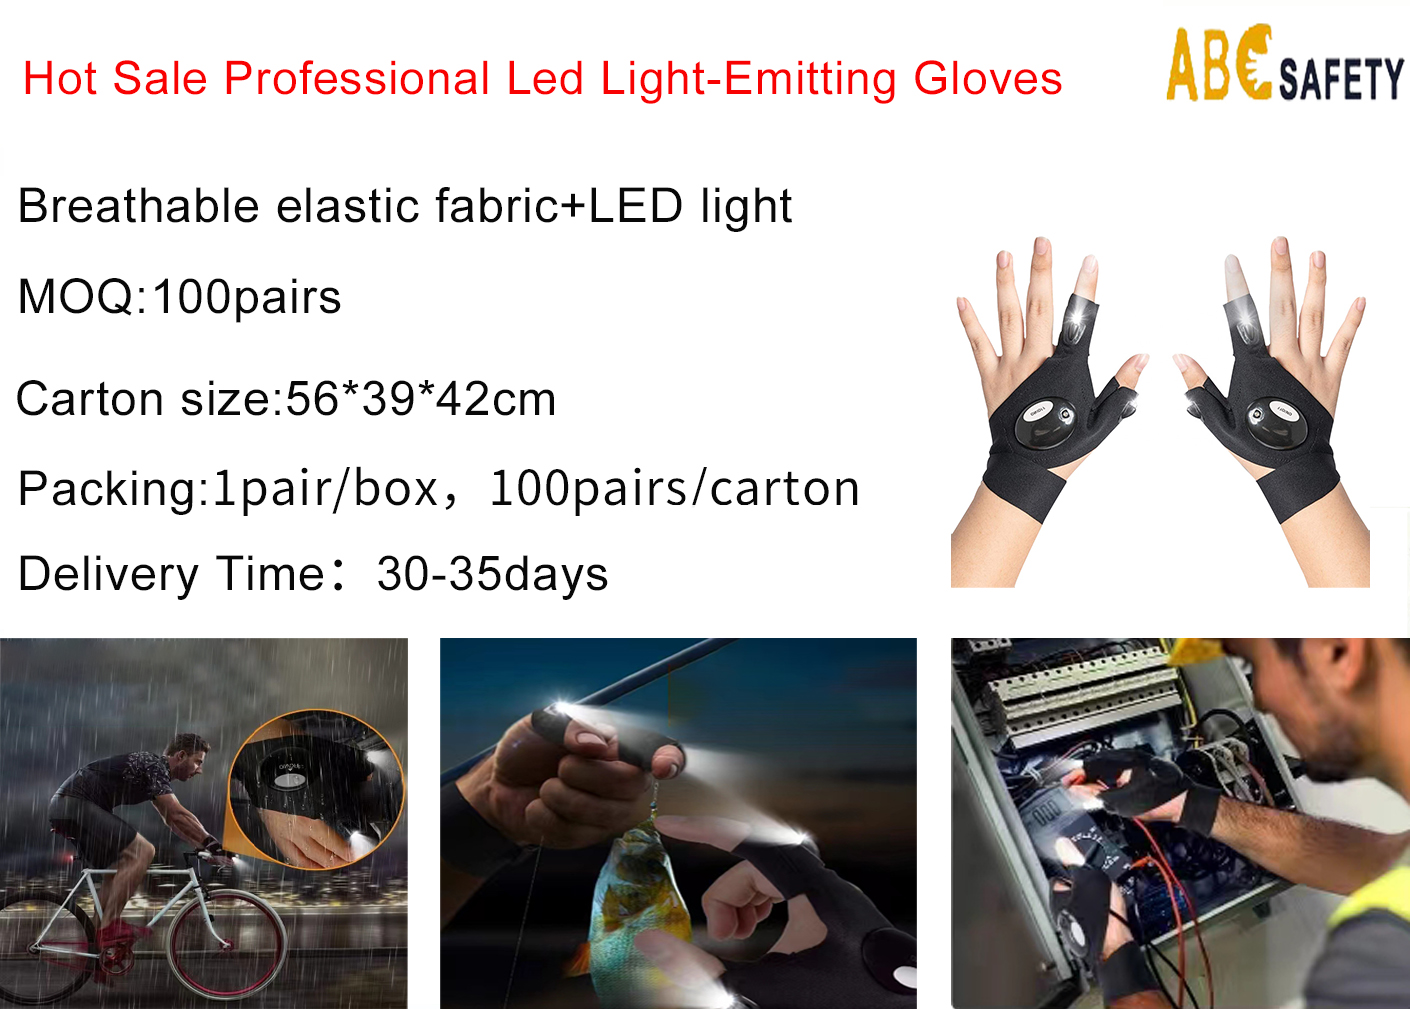 Hot Sale Professional Led Light-Emitting Gloves